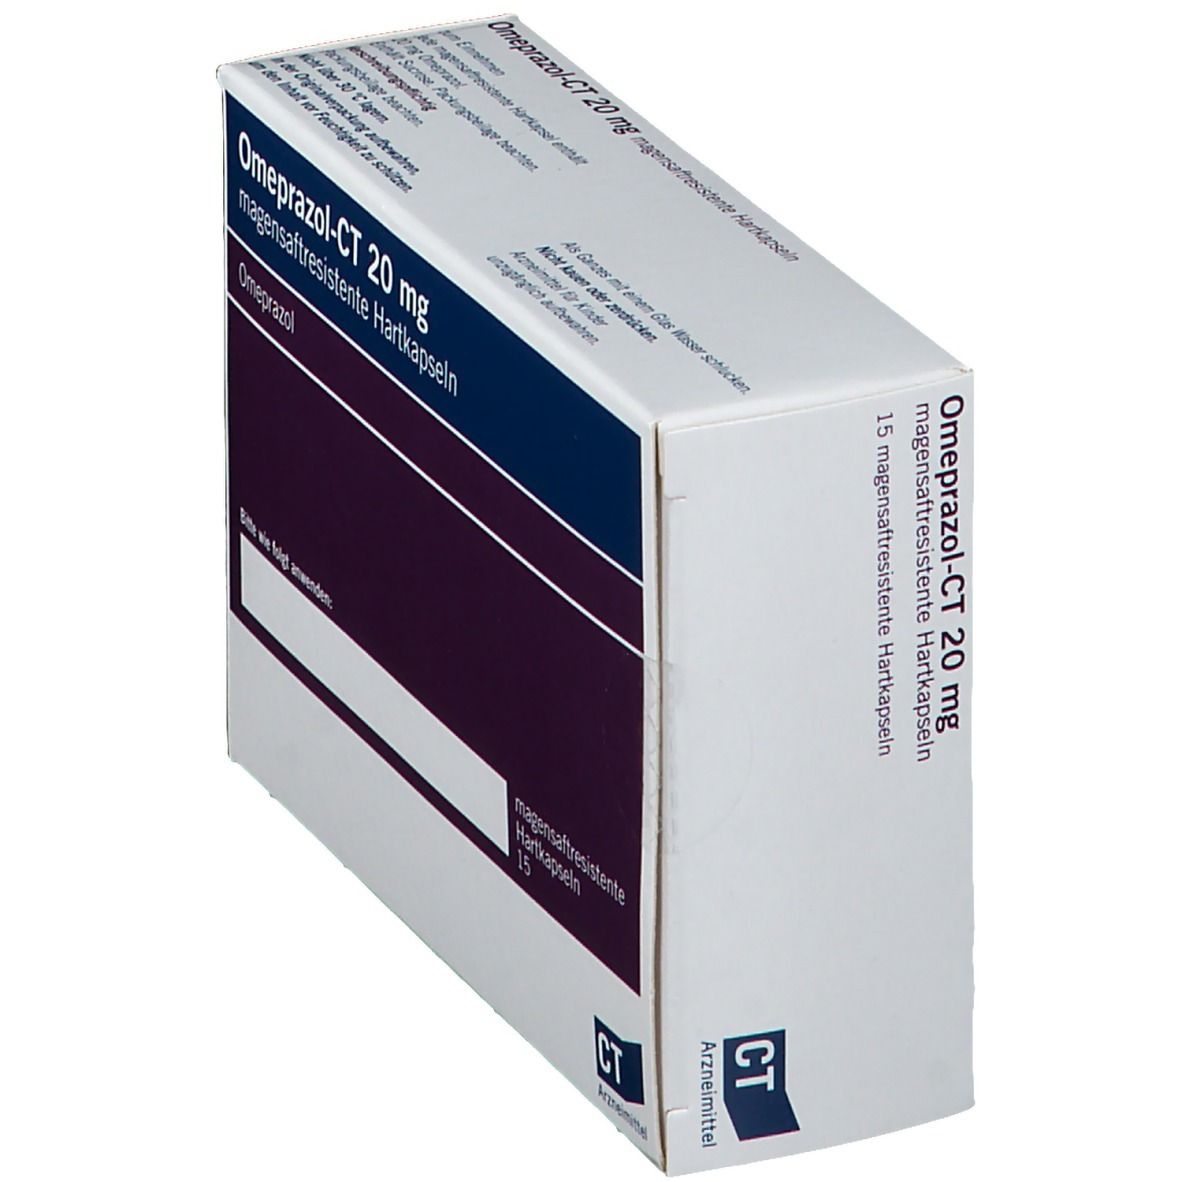 Omeprazol-CT 20 mg